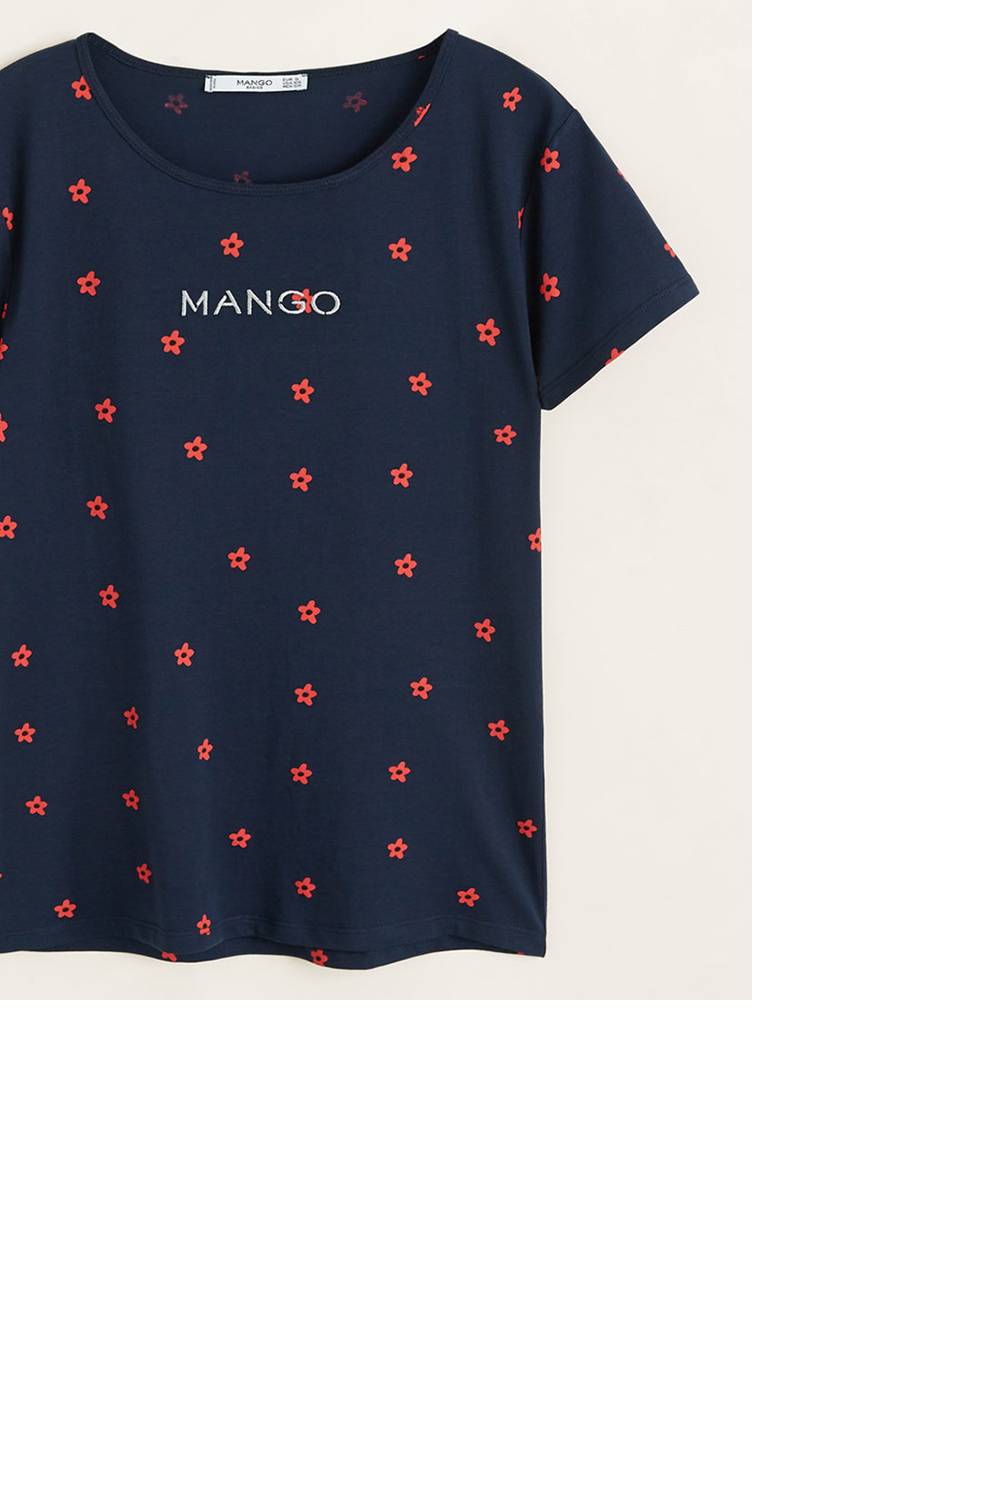 MANGO - Camiseta logo estampada